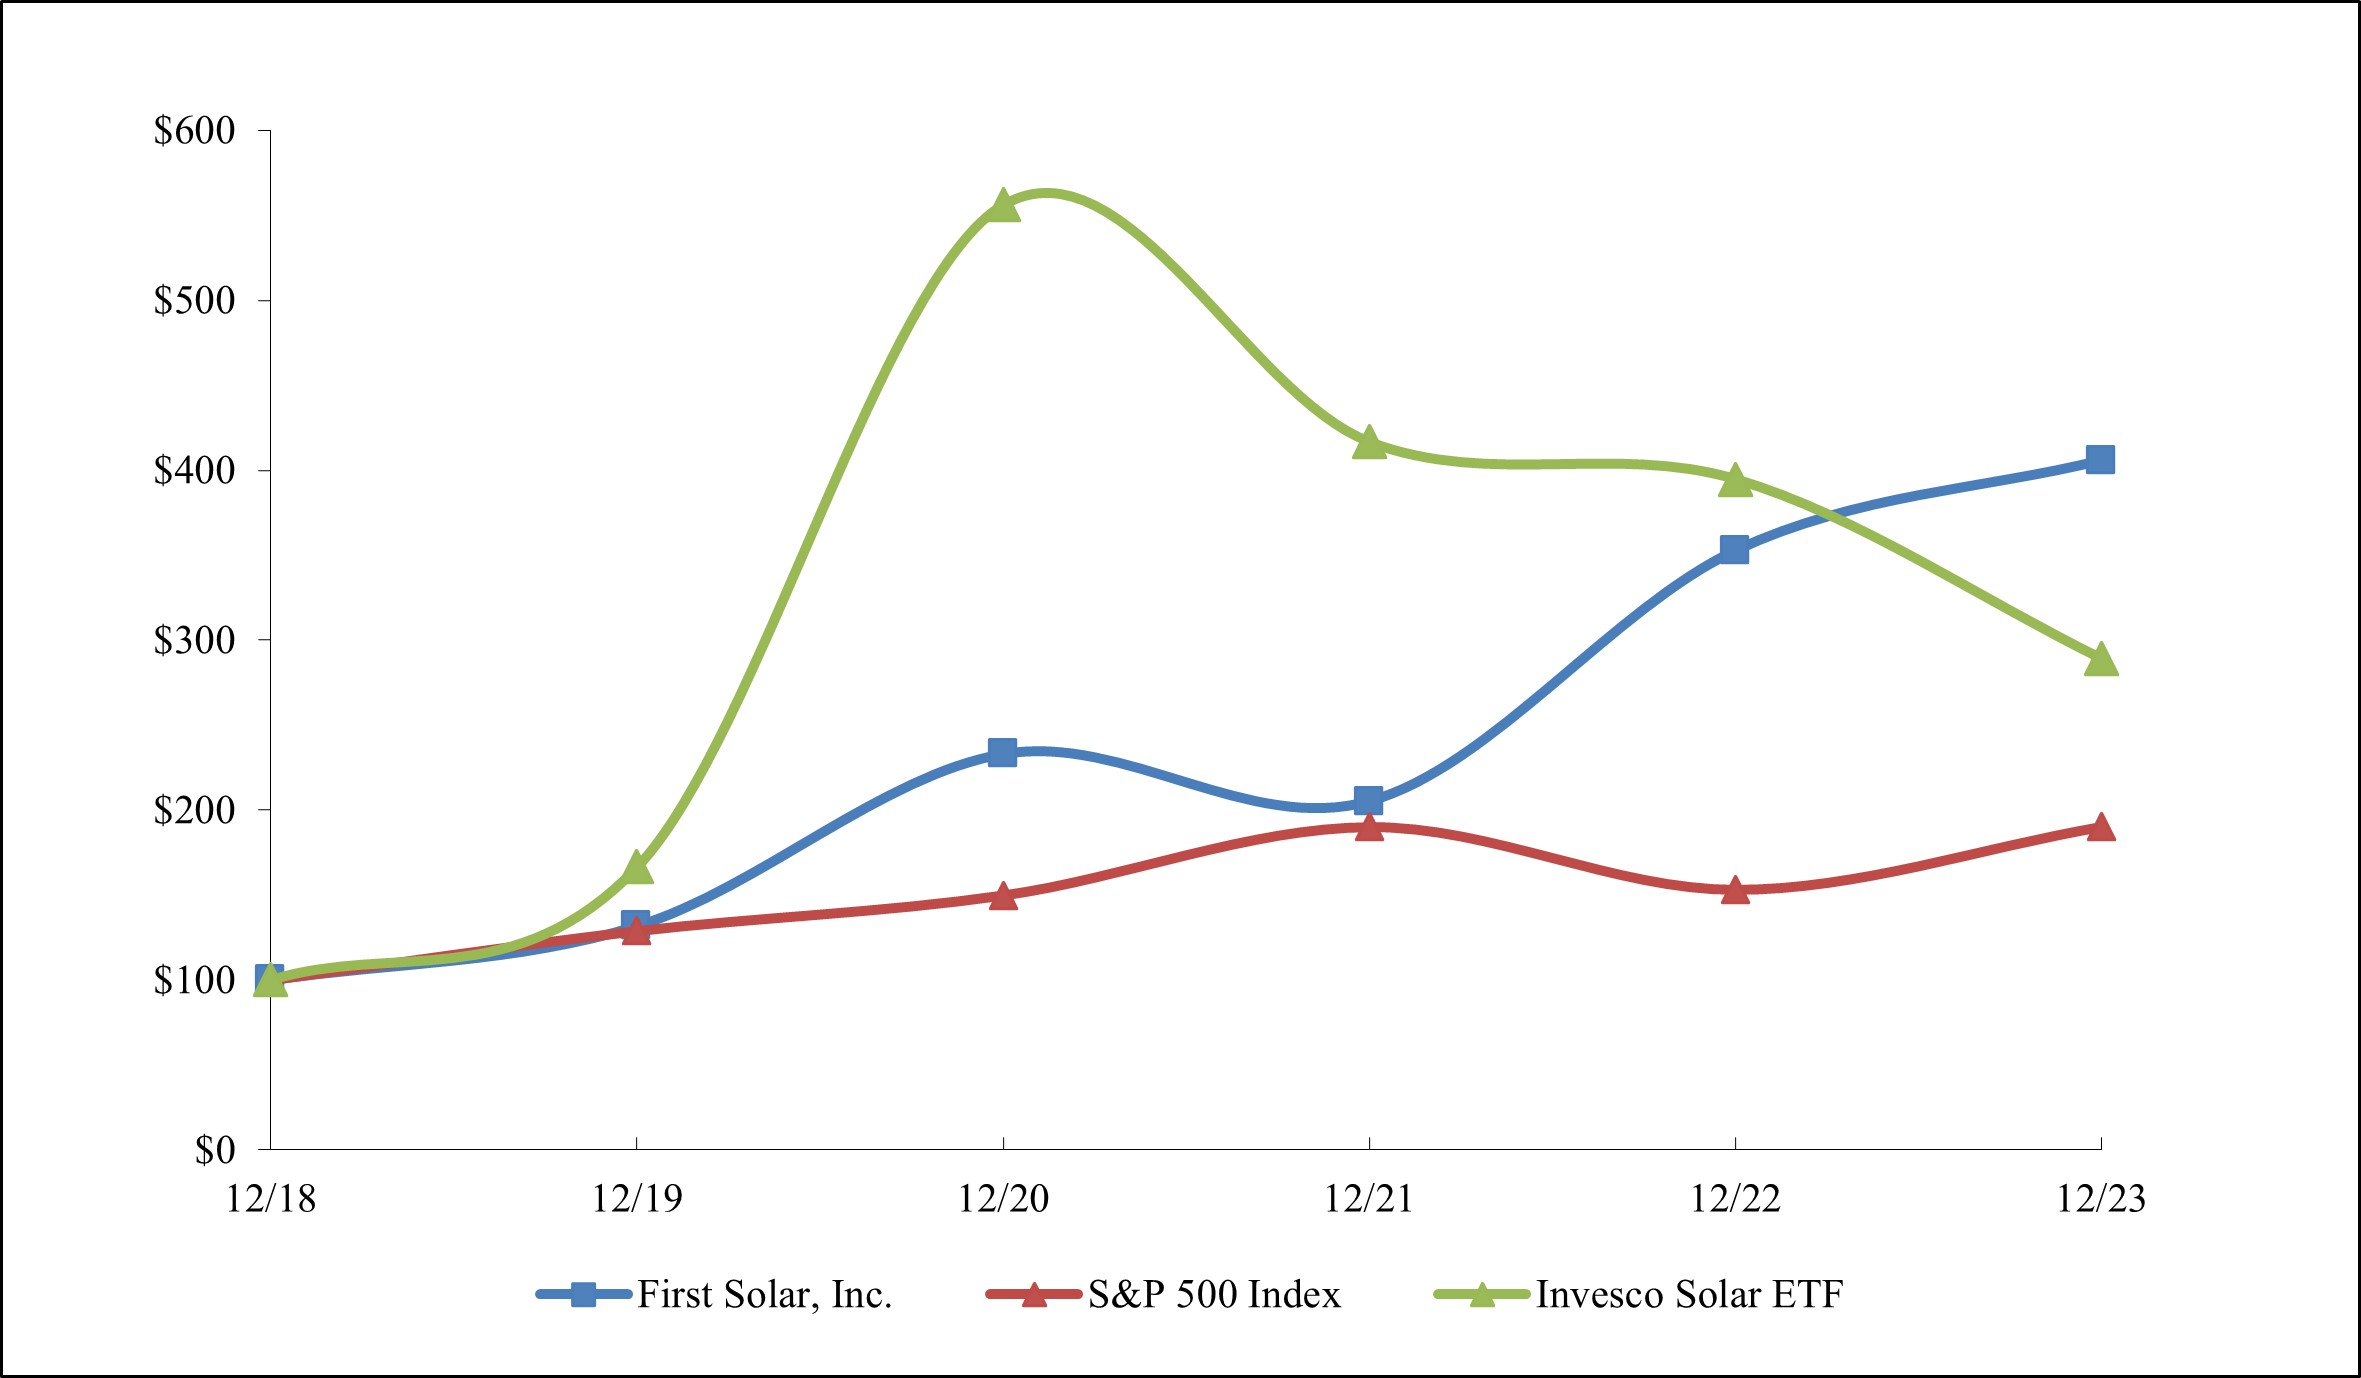 I5.1a - 2023 Stock Price Performance Graph Image.jpg